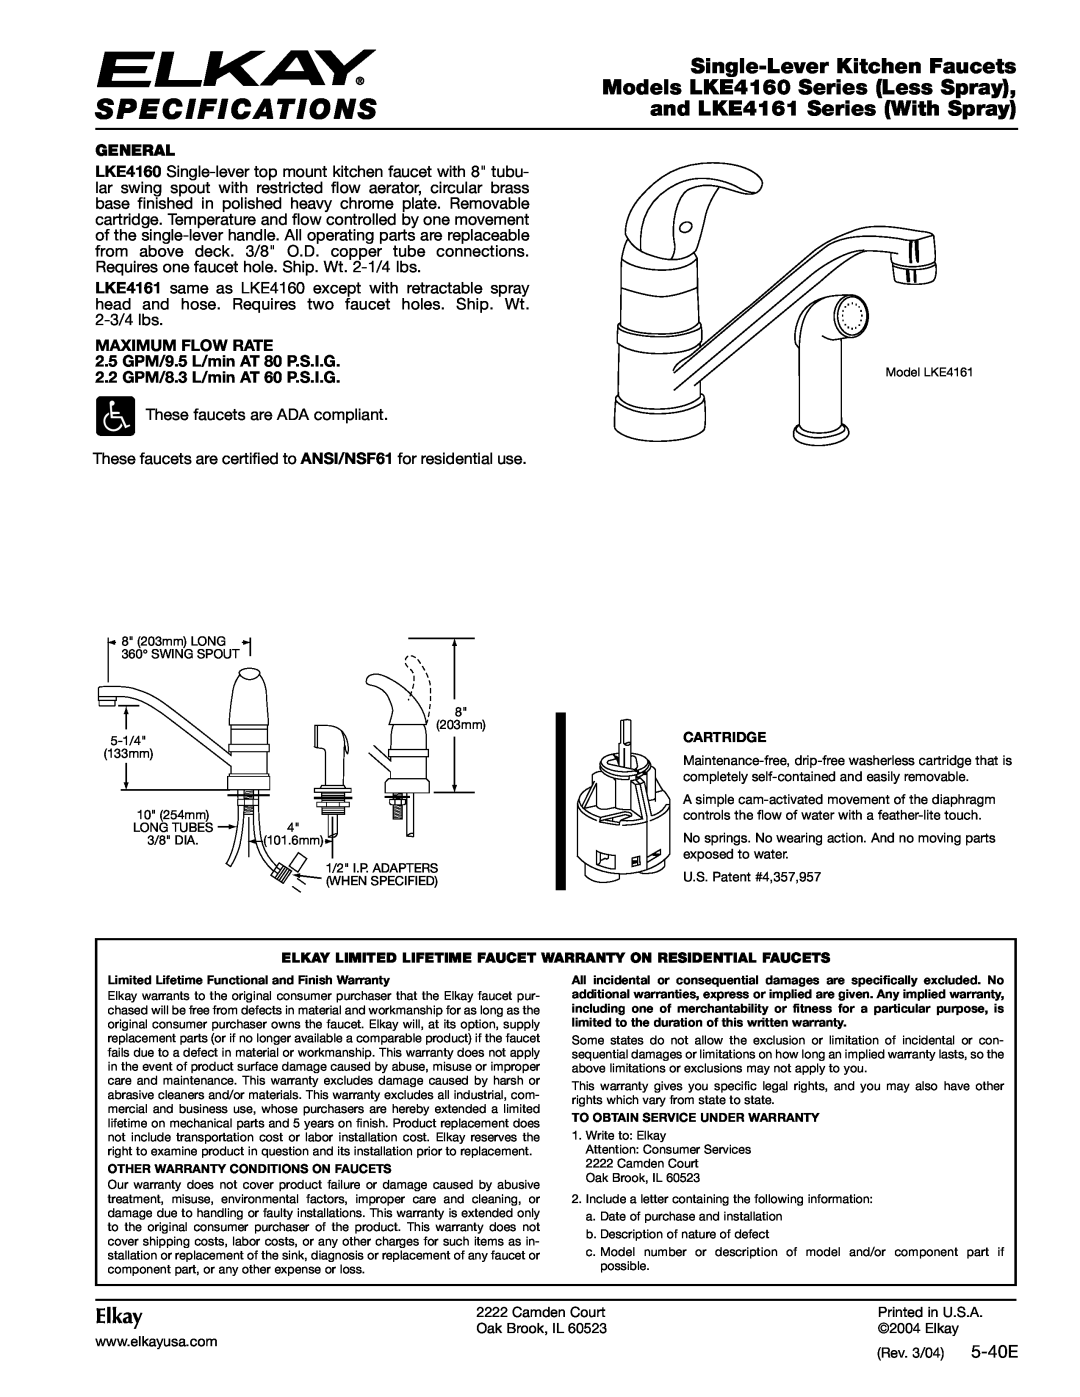 Elkay specifications Specifications, Single-LeverKitchen Faucets, Models LKE4160 Series Less Spray, Elkay, 5-40E 